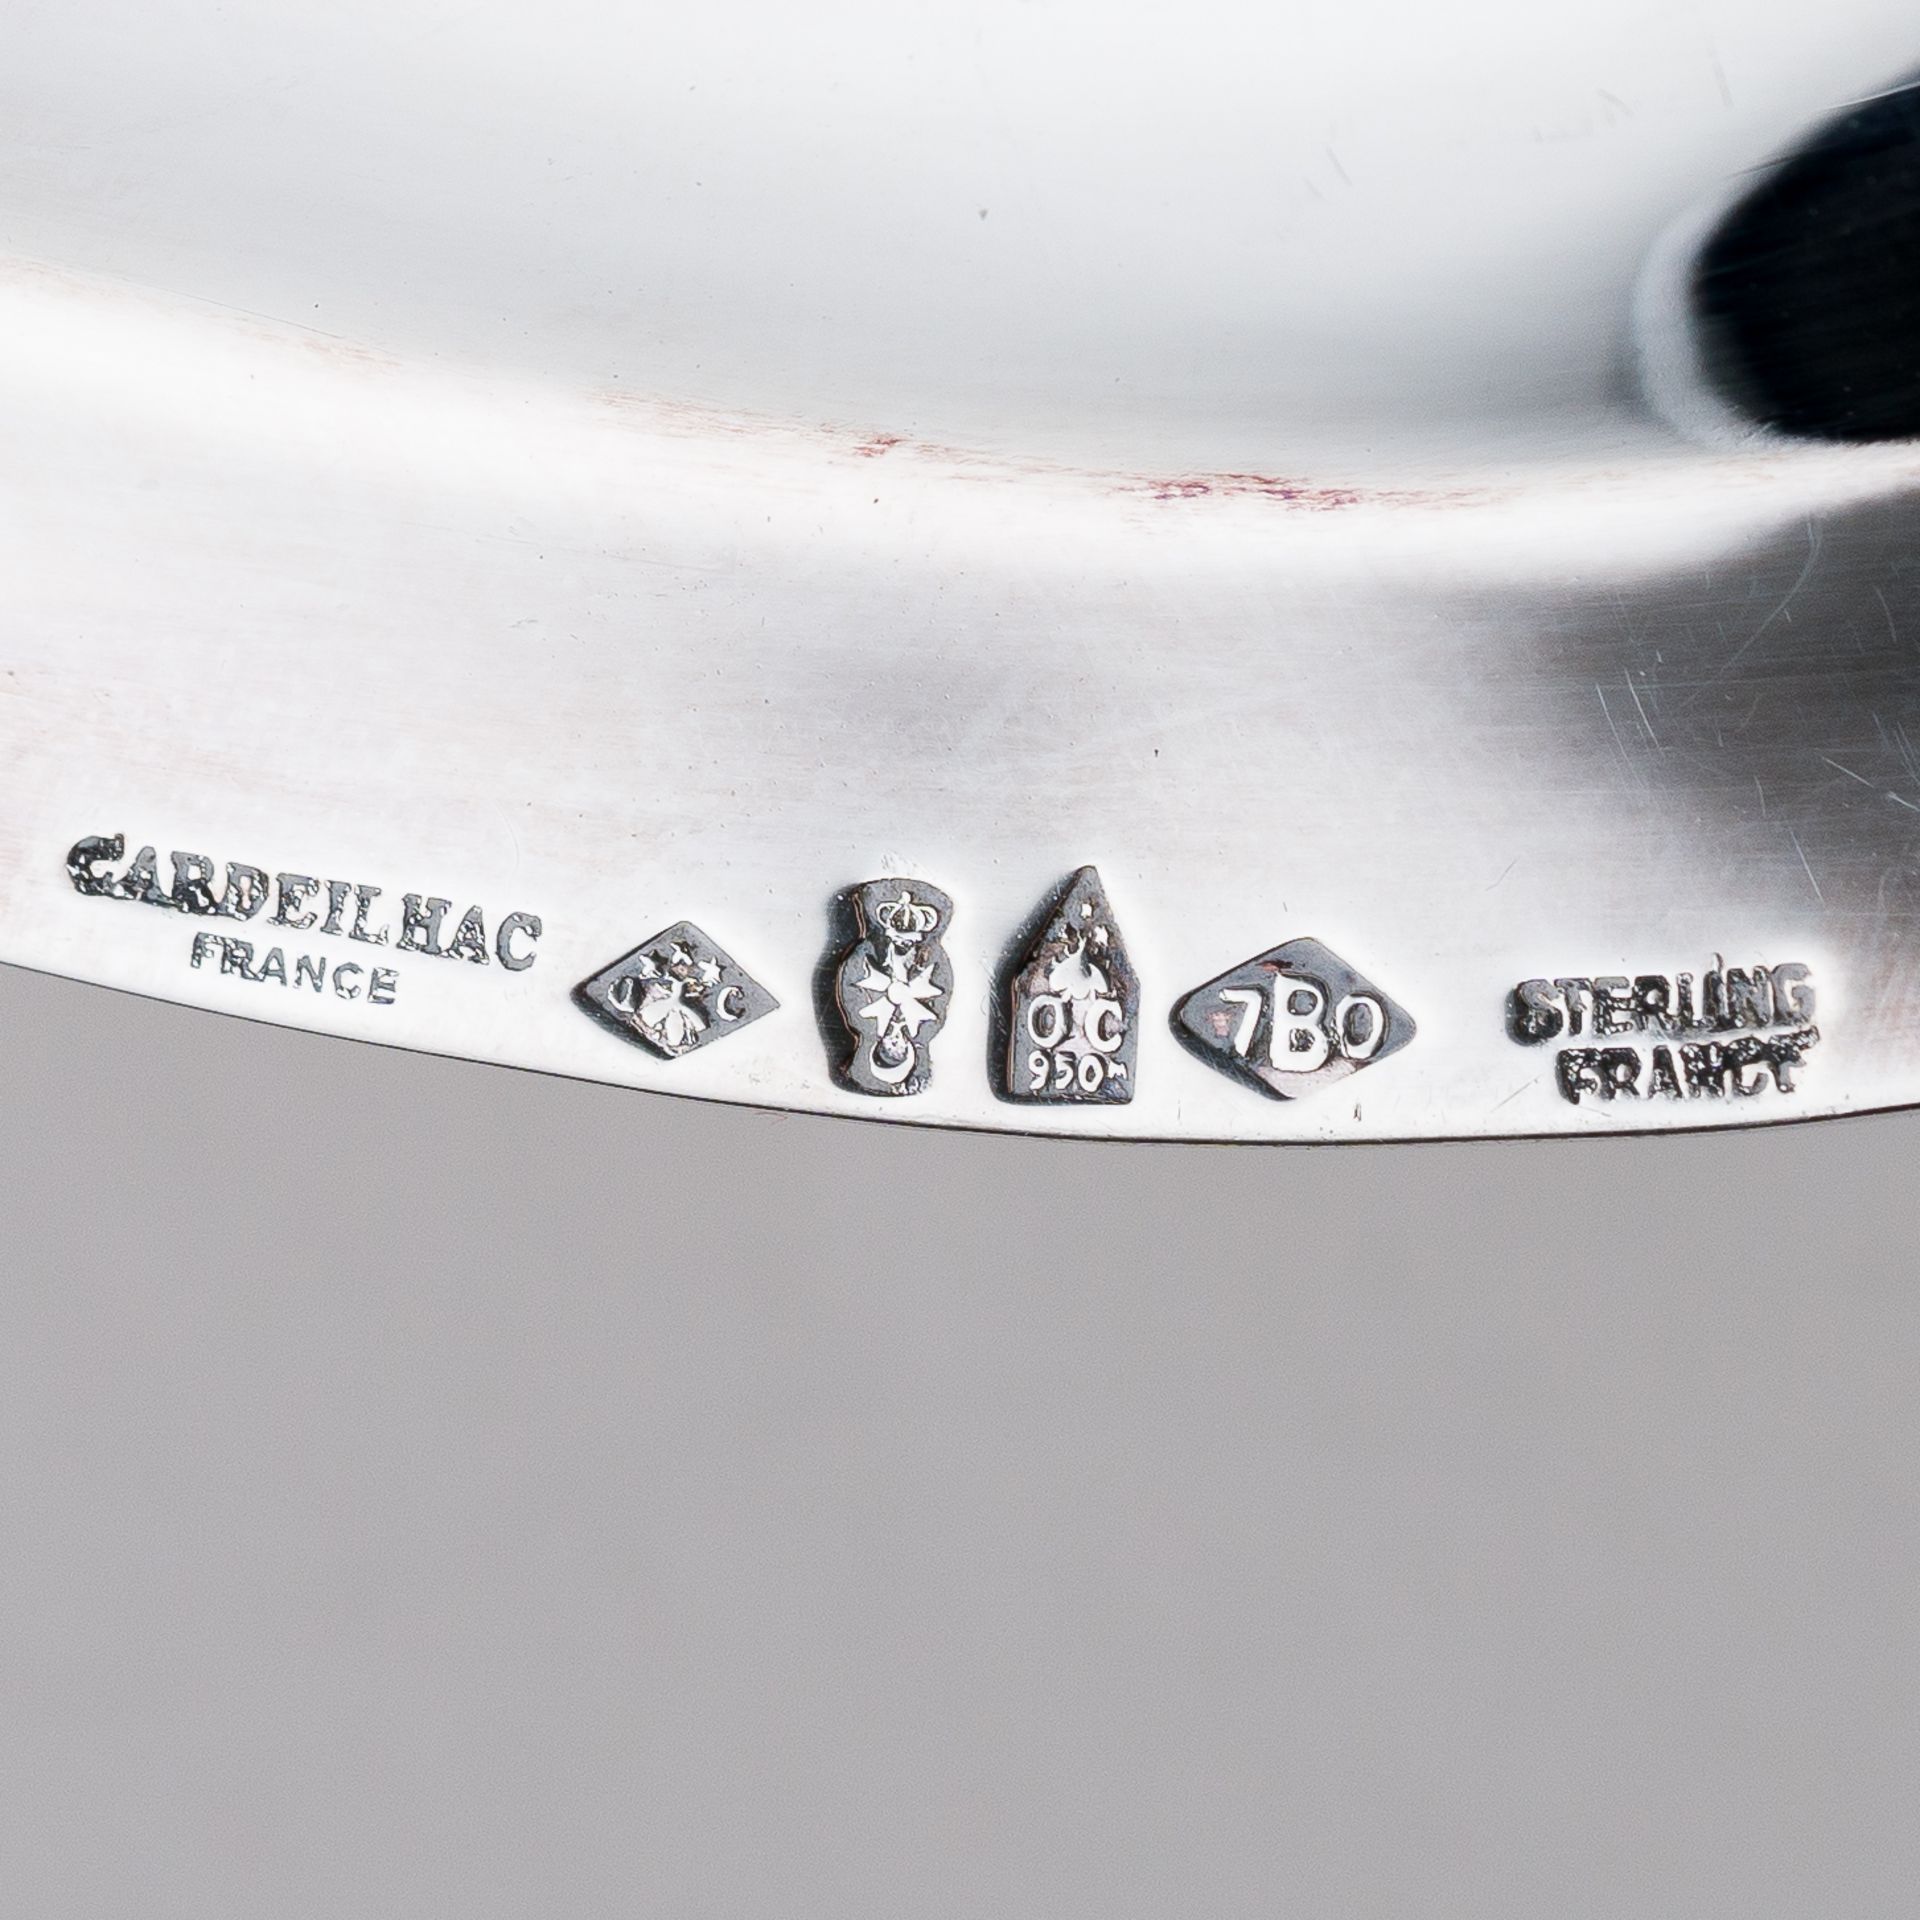 Silber Sauciere mit Monogramm Cardeilhac France 0,8 kg 925 Sterling Silber - Image 7 of 7